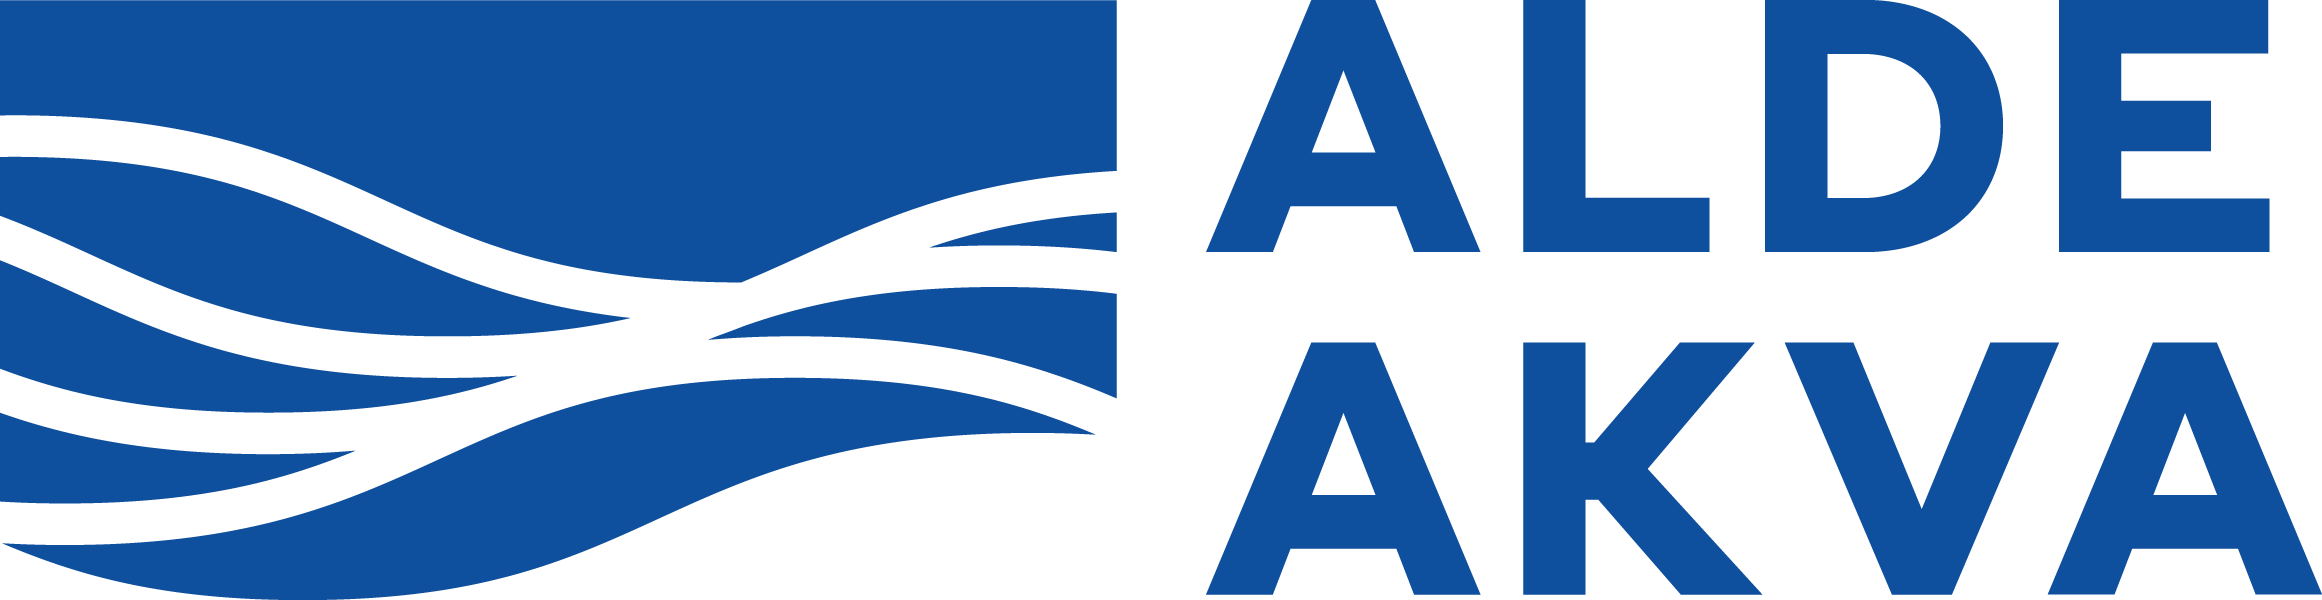 ALDEAKVA-Logo_landscape_blue_CMYK[1]